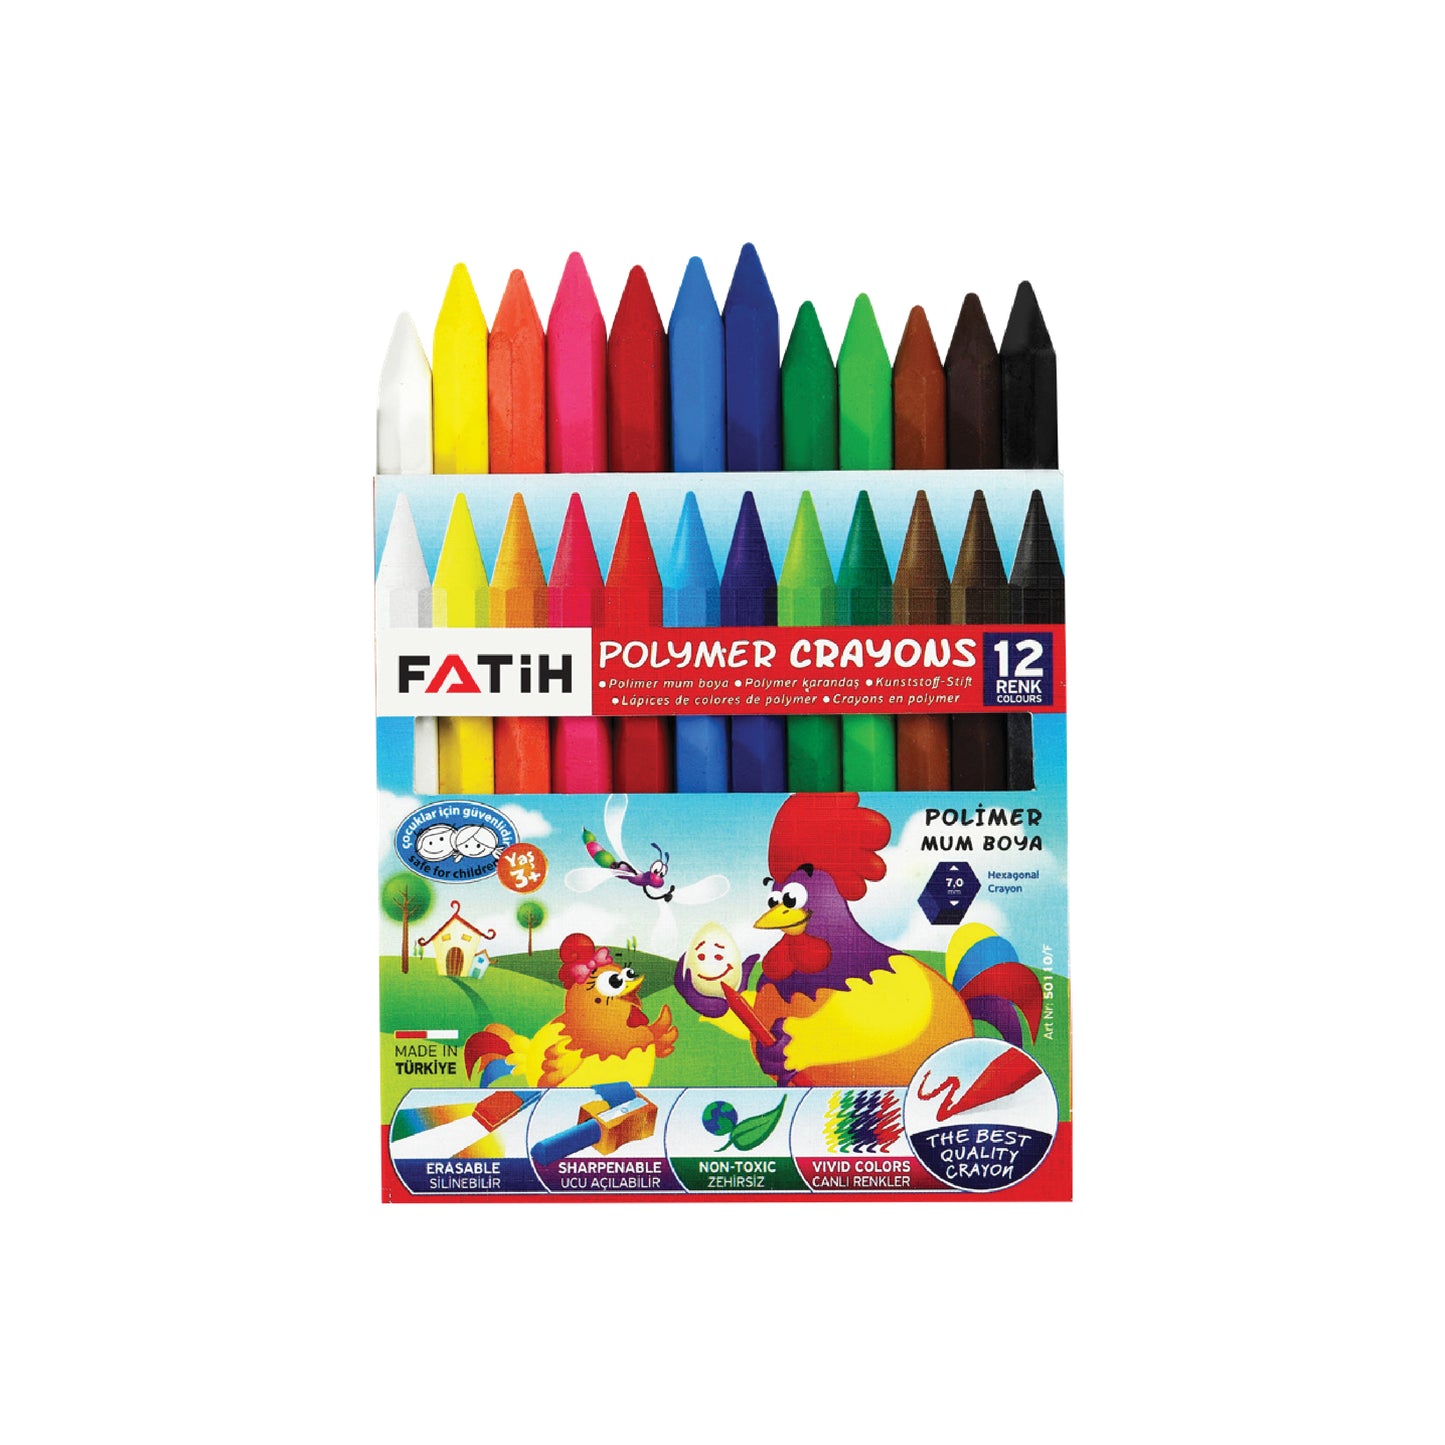 Fatih Polymer Crayons 12 color